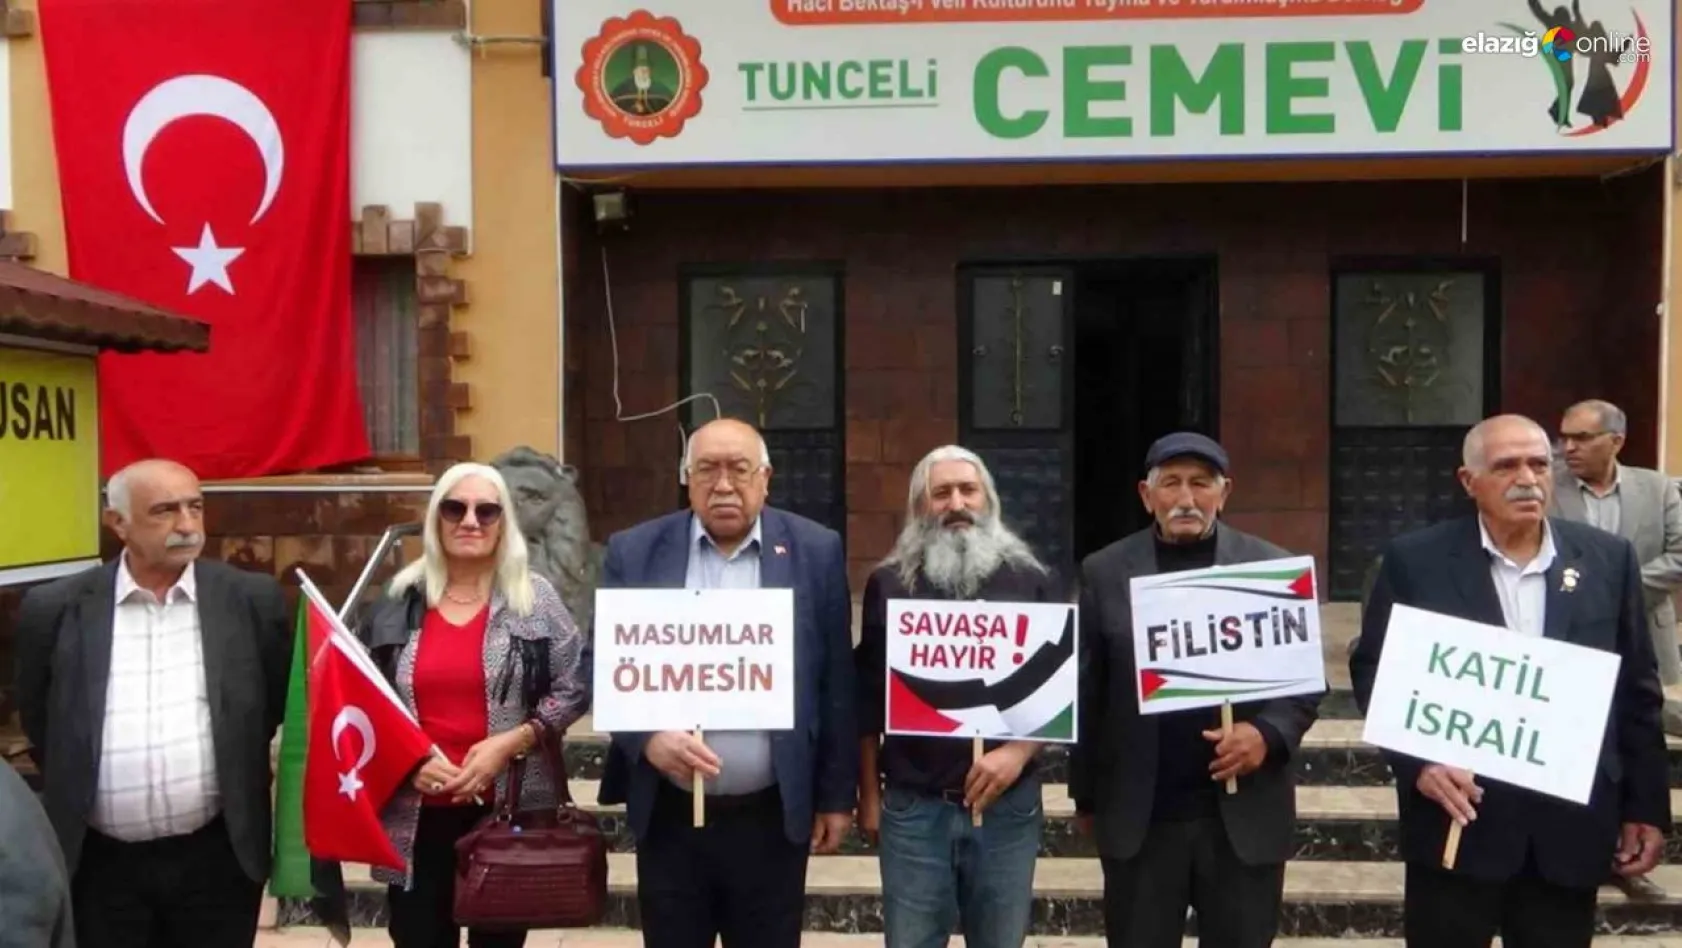 Tunceli'de cemevinden İsrail'e protesto, Filistin'e destek